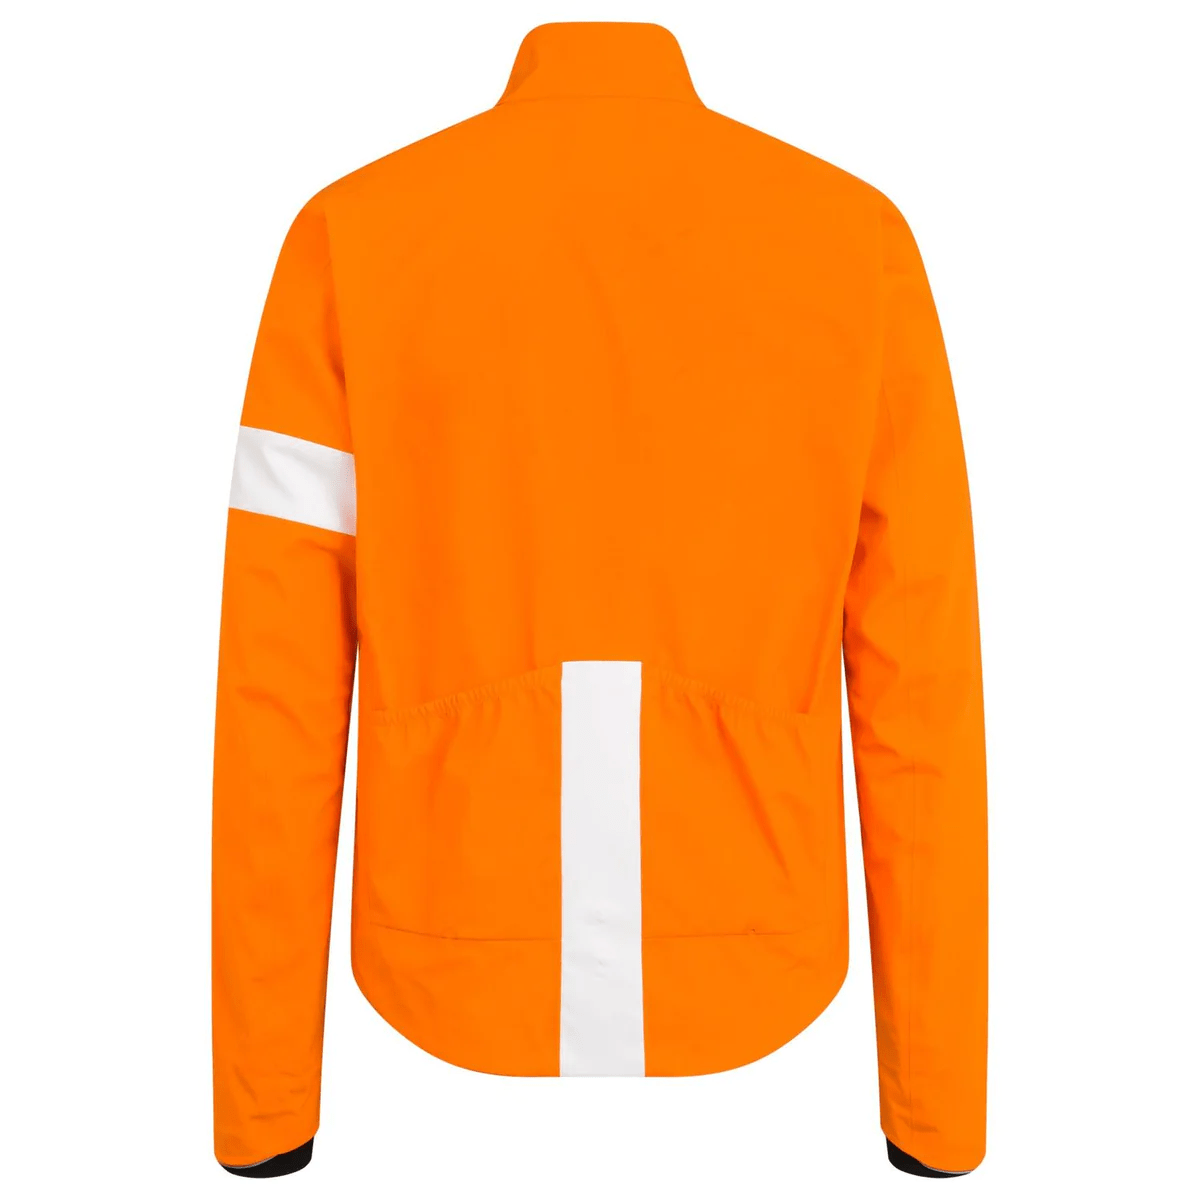 Rapha Men's Classic Winter Jacket Bright Orange Small Apparel - Clothing - Men's Jackets - Road